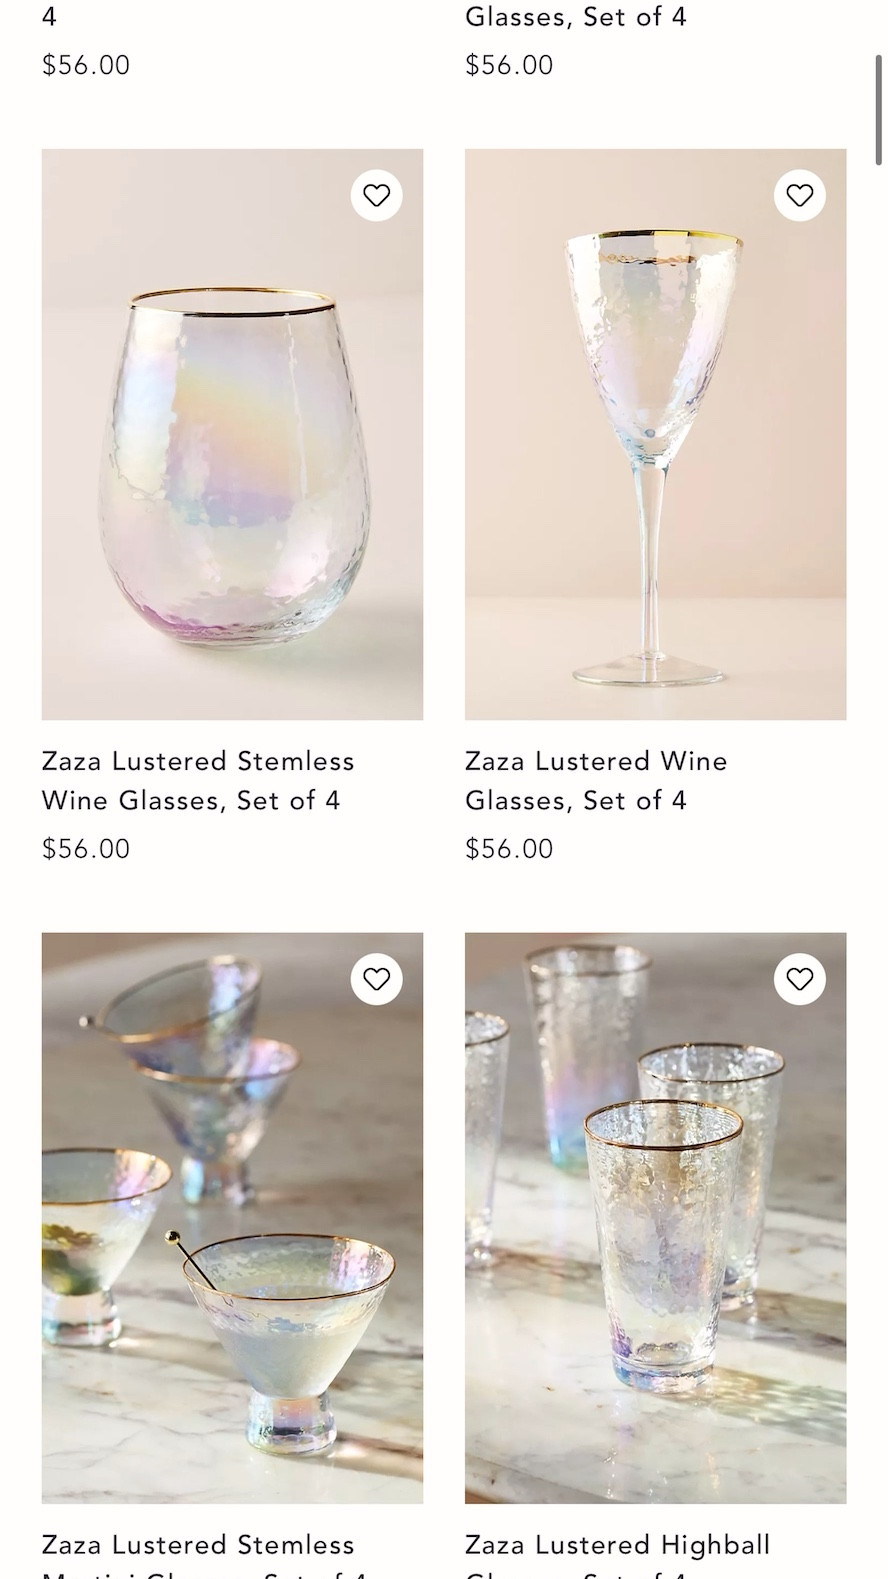 Zaza Lustered Highball Glasses, Set of 4